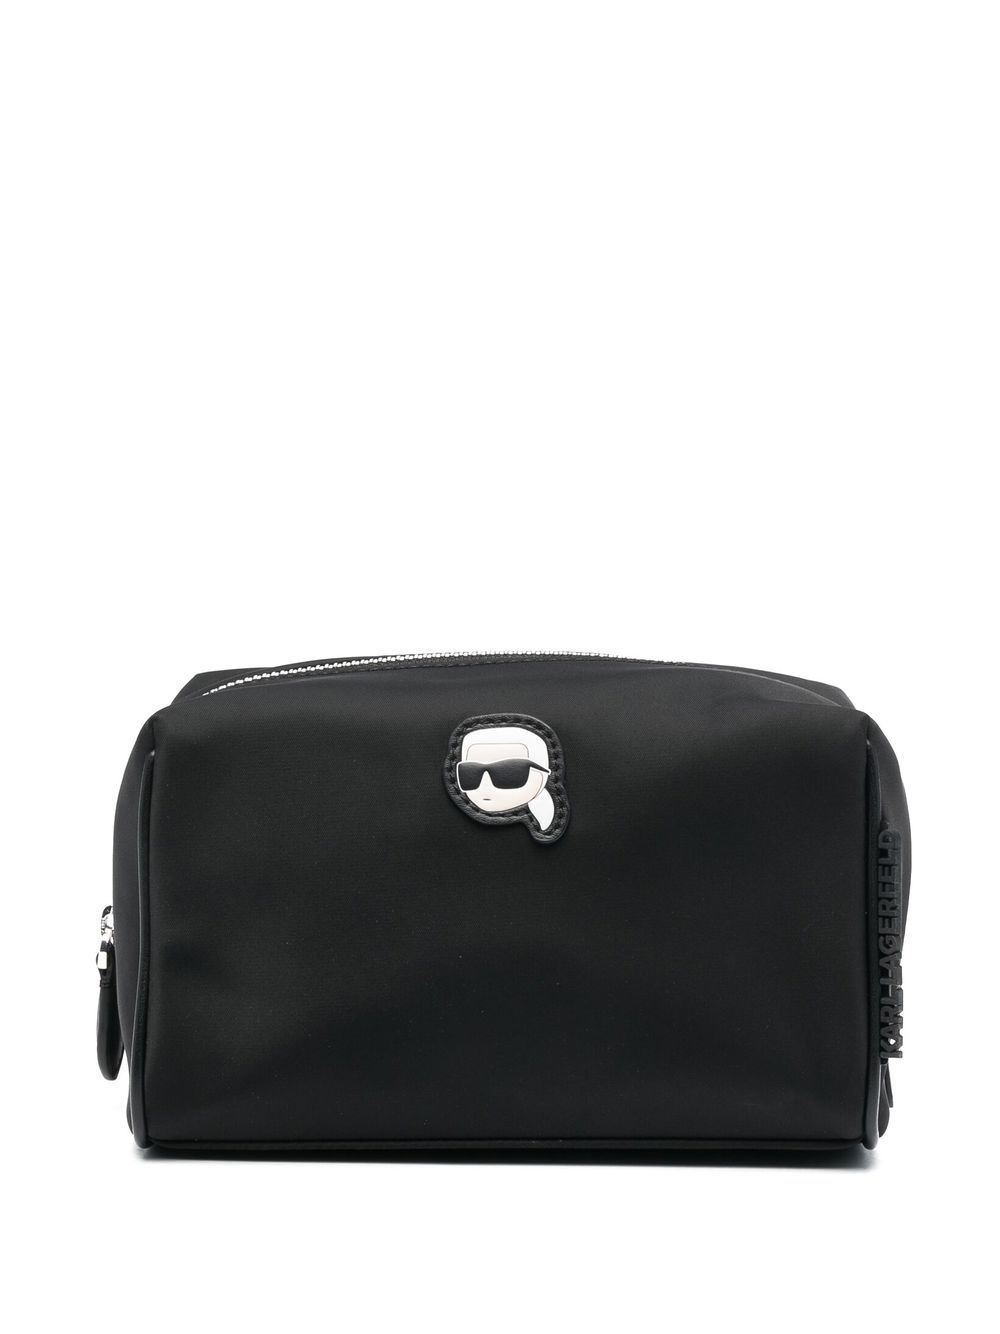 Karl Lagerfeld Ikonik 2.0 Makeup Bag In Black